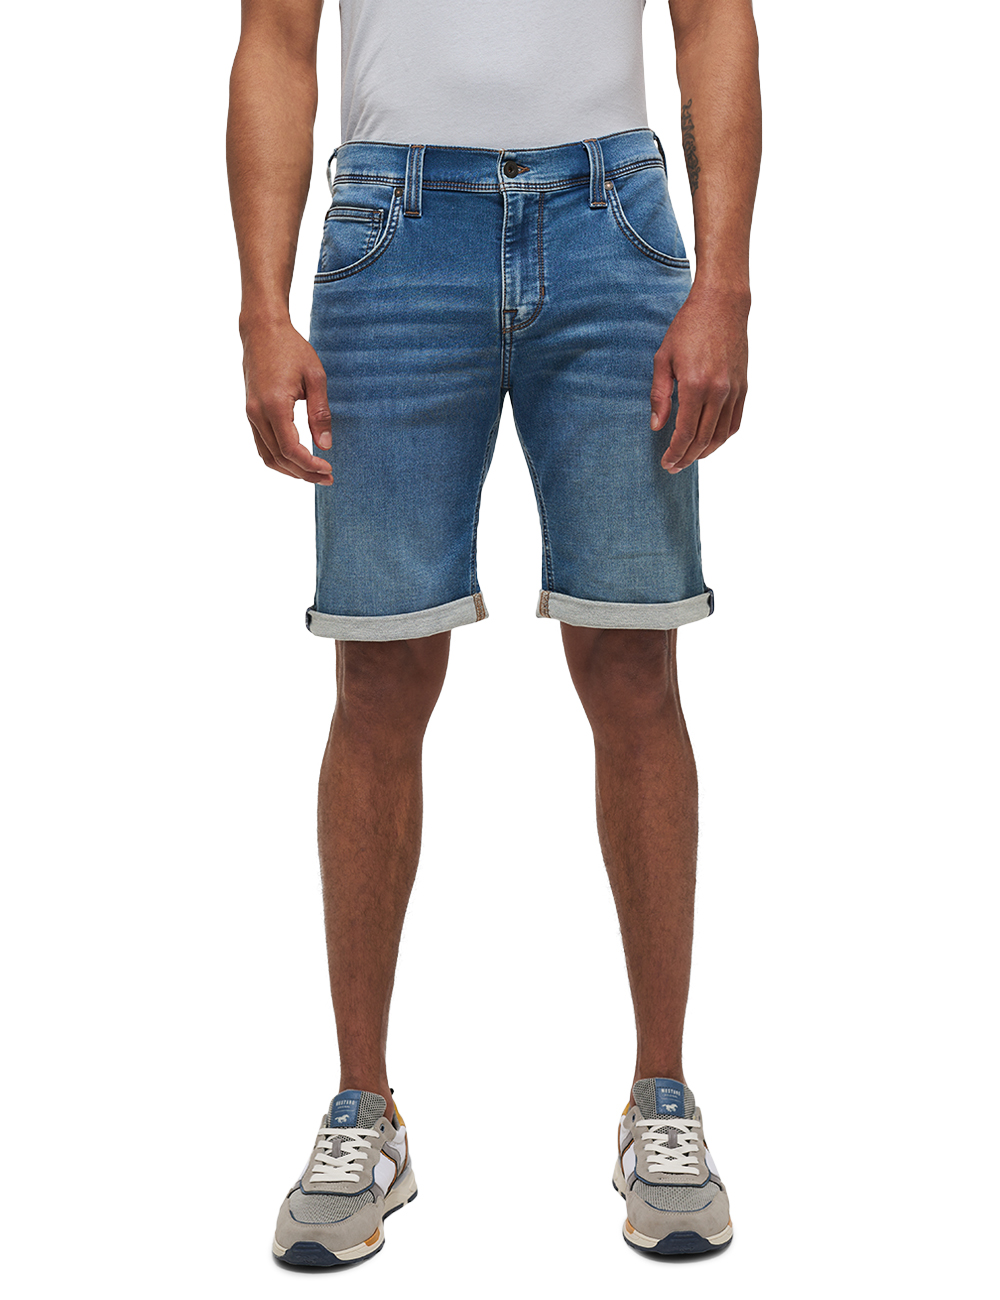 shoppen Jeans aktuelle Shorts Modetrends - online jetzt